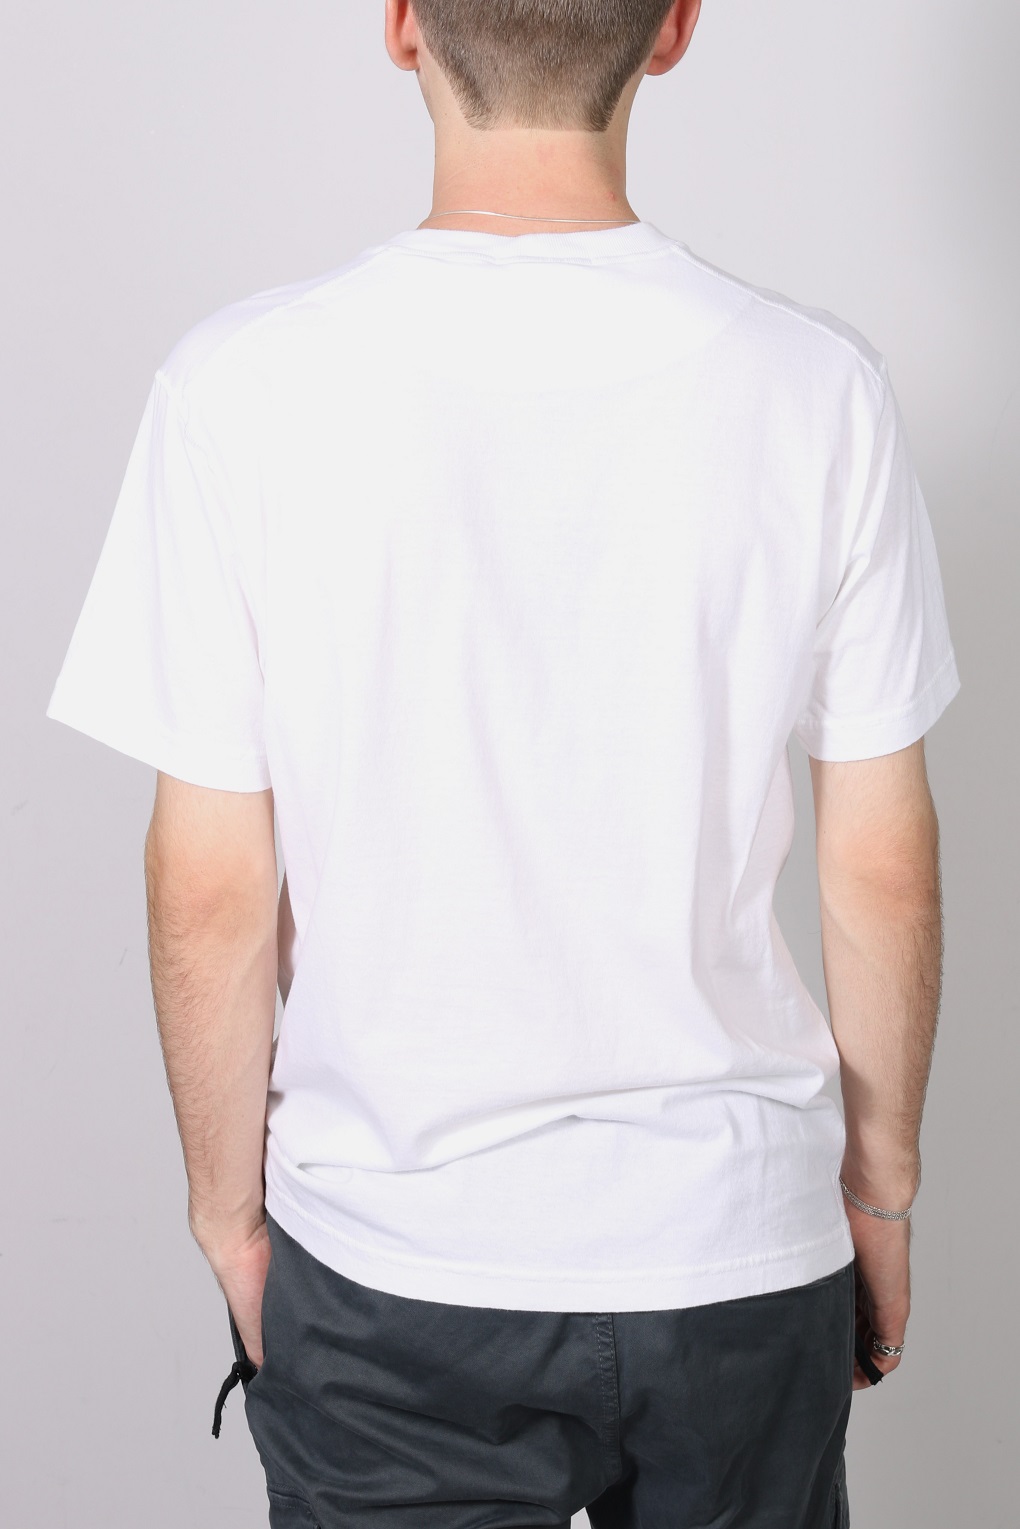 STONE ISLAND T-Shirt in White S